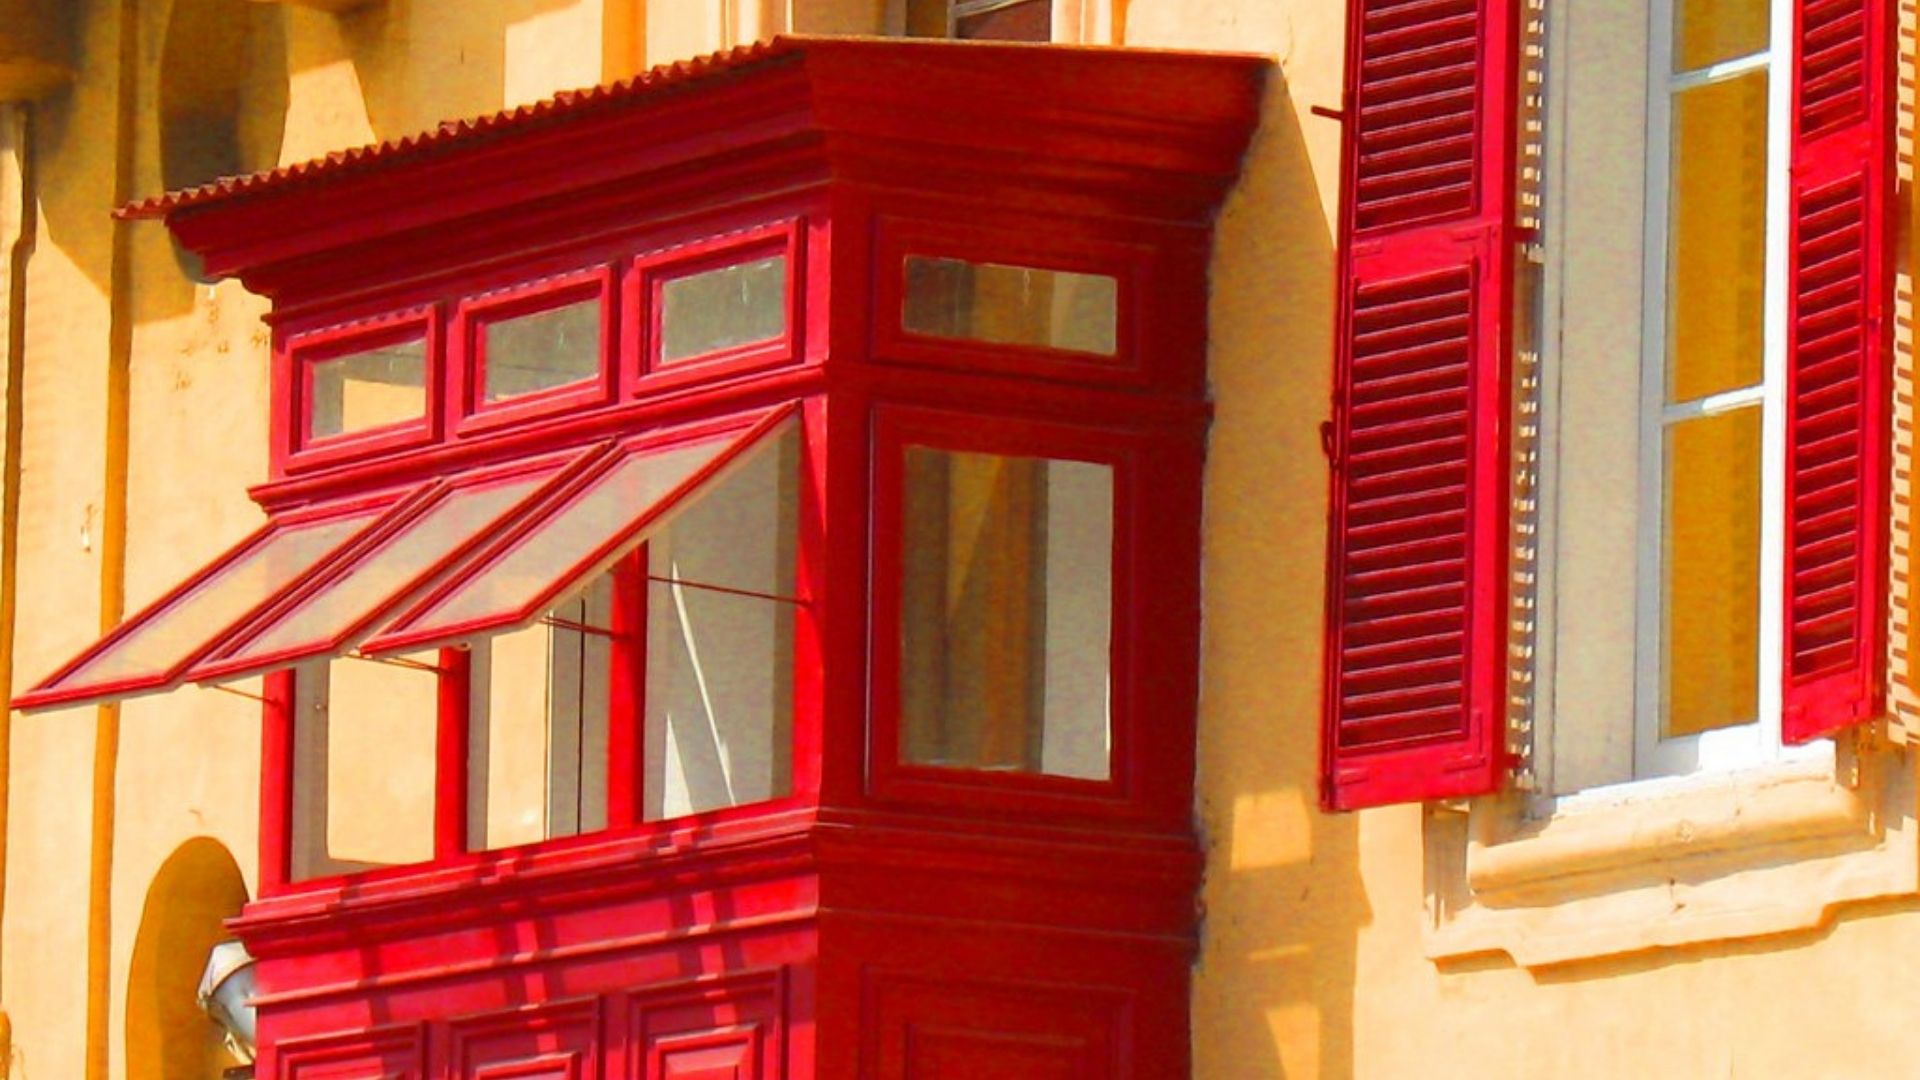 Top 5 Red Things in Malta